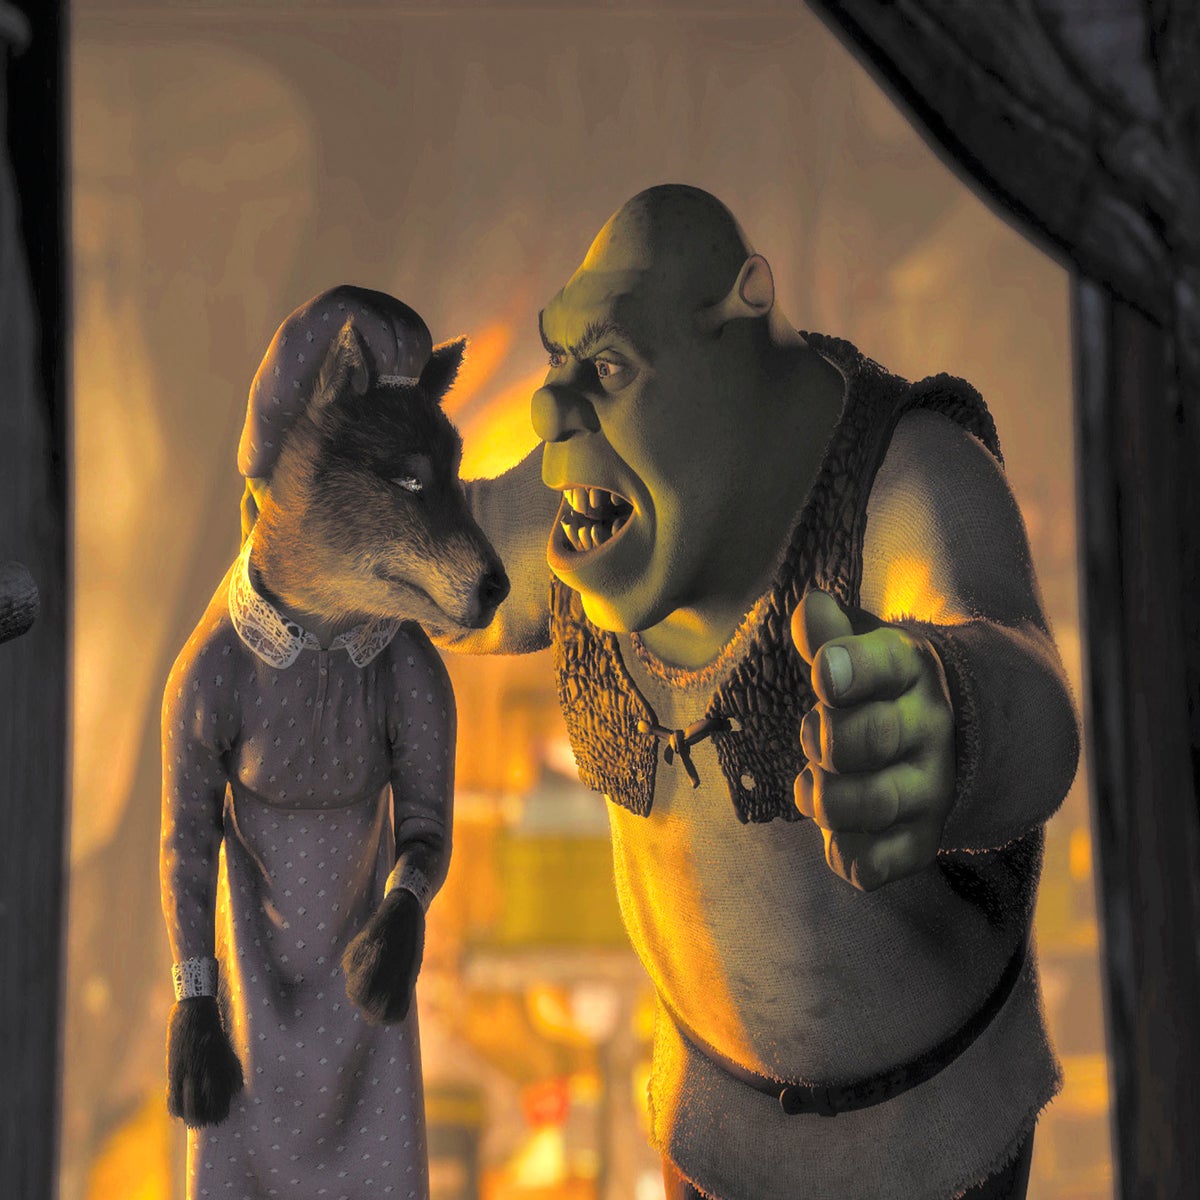 Shrek fans horrified as dark joke hidden in background of scenes goes viral  on TikTok | The Independent